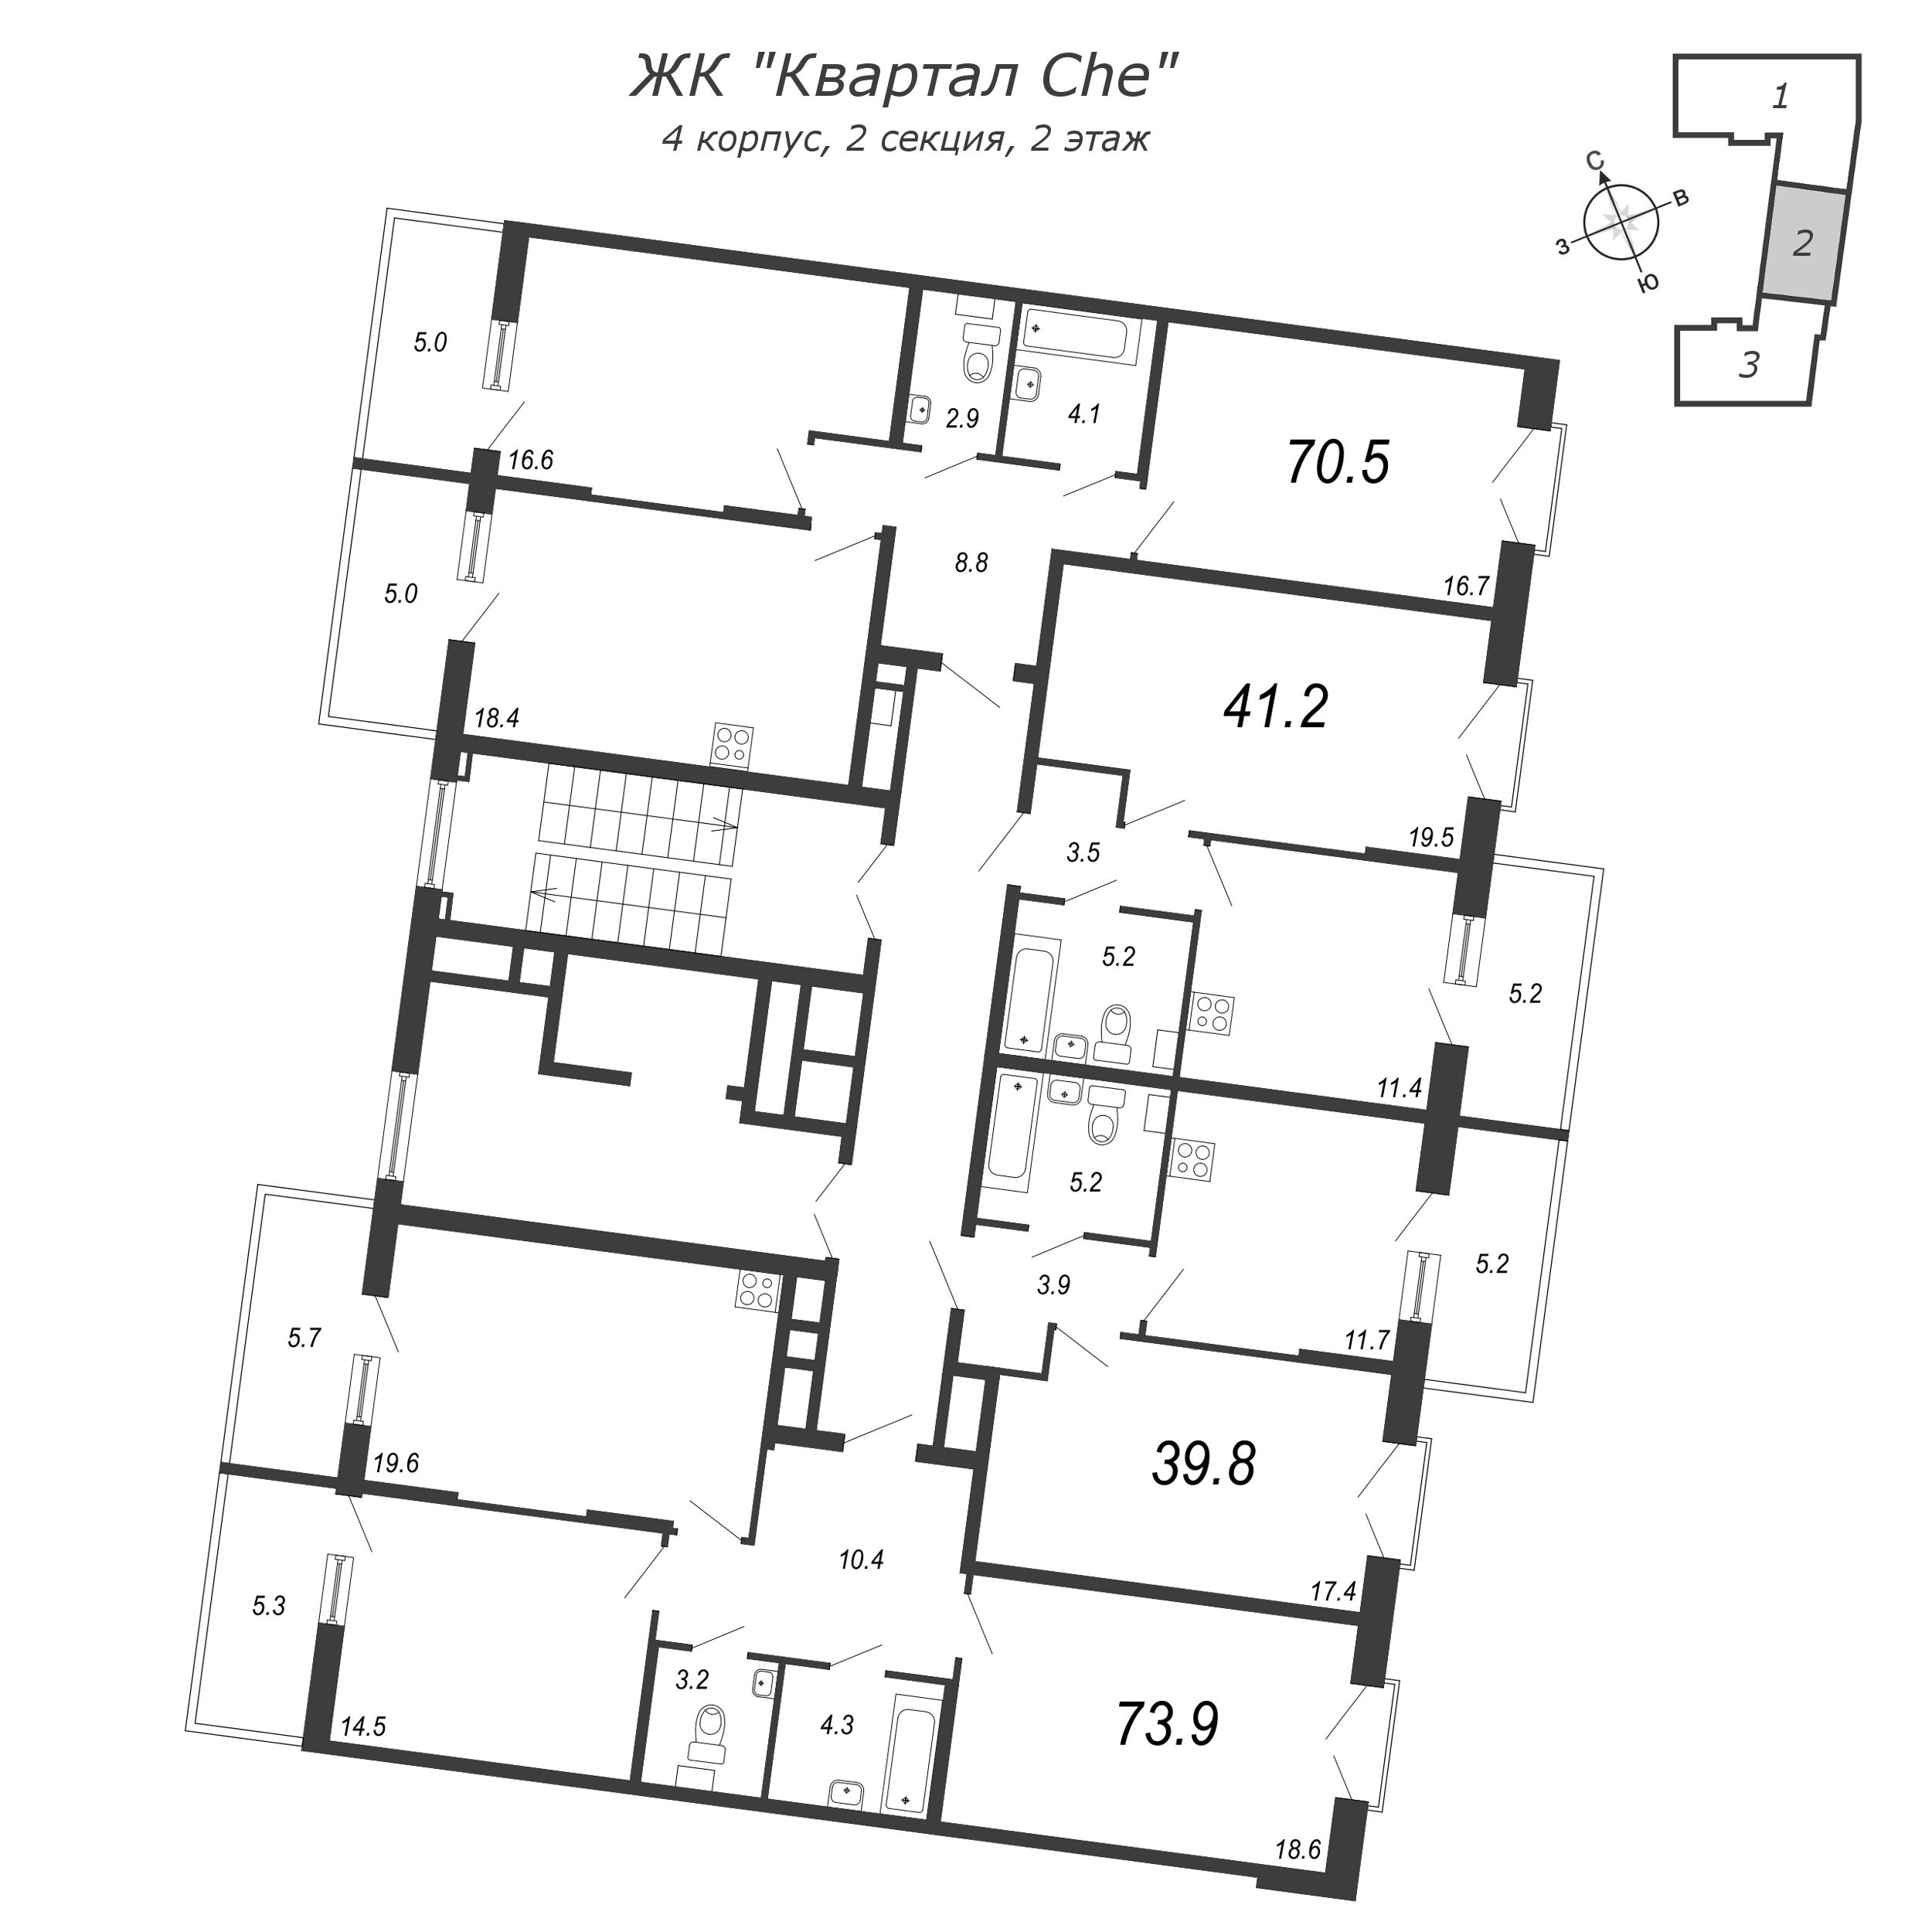 1-комнатная квартира, 39.7 м² в ЖК "Квартал Che" - планировка этажа